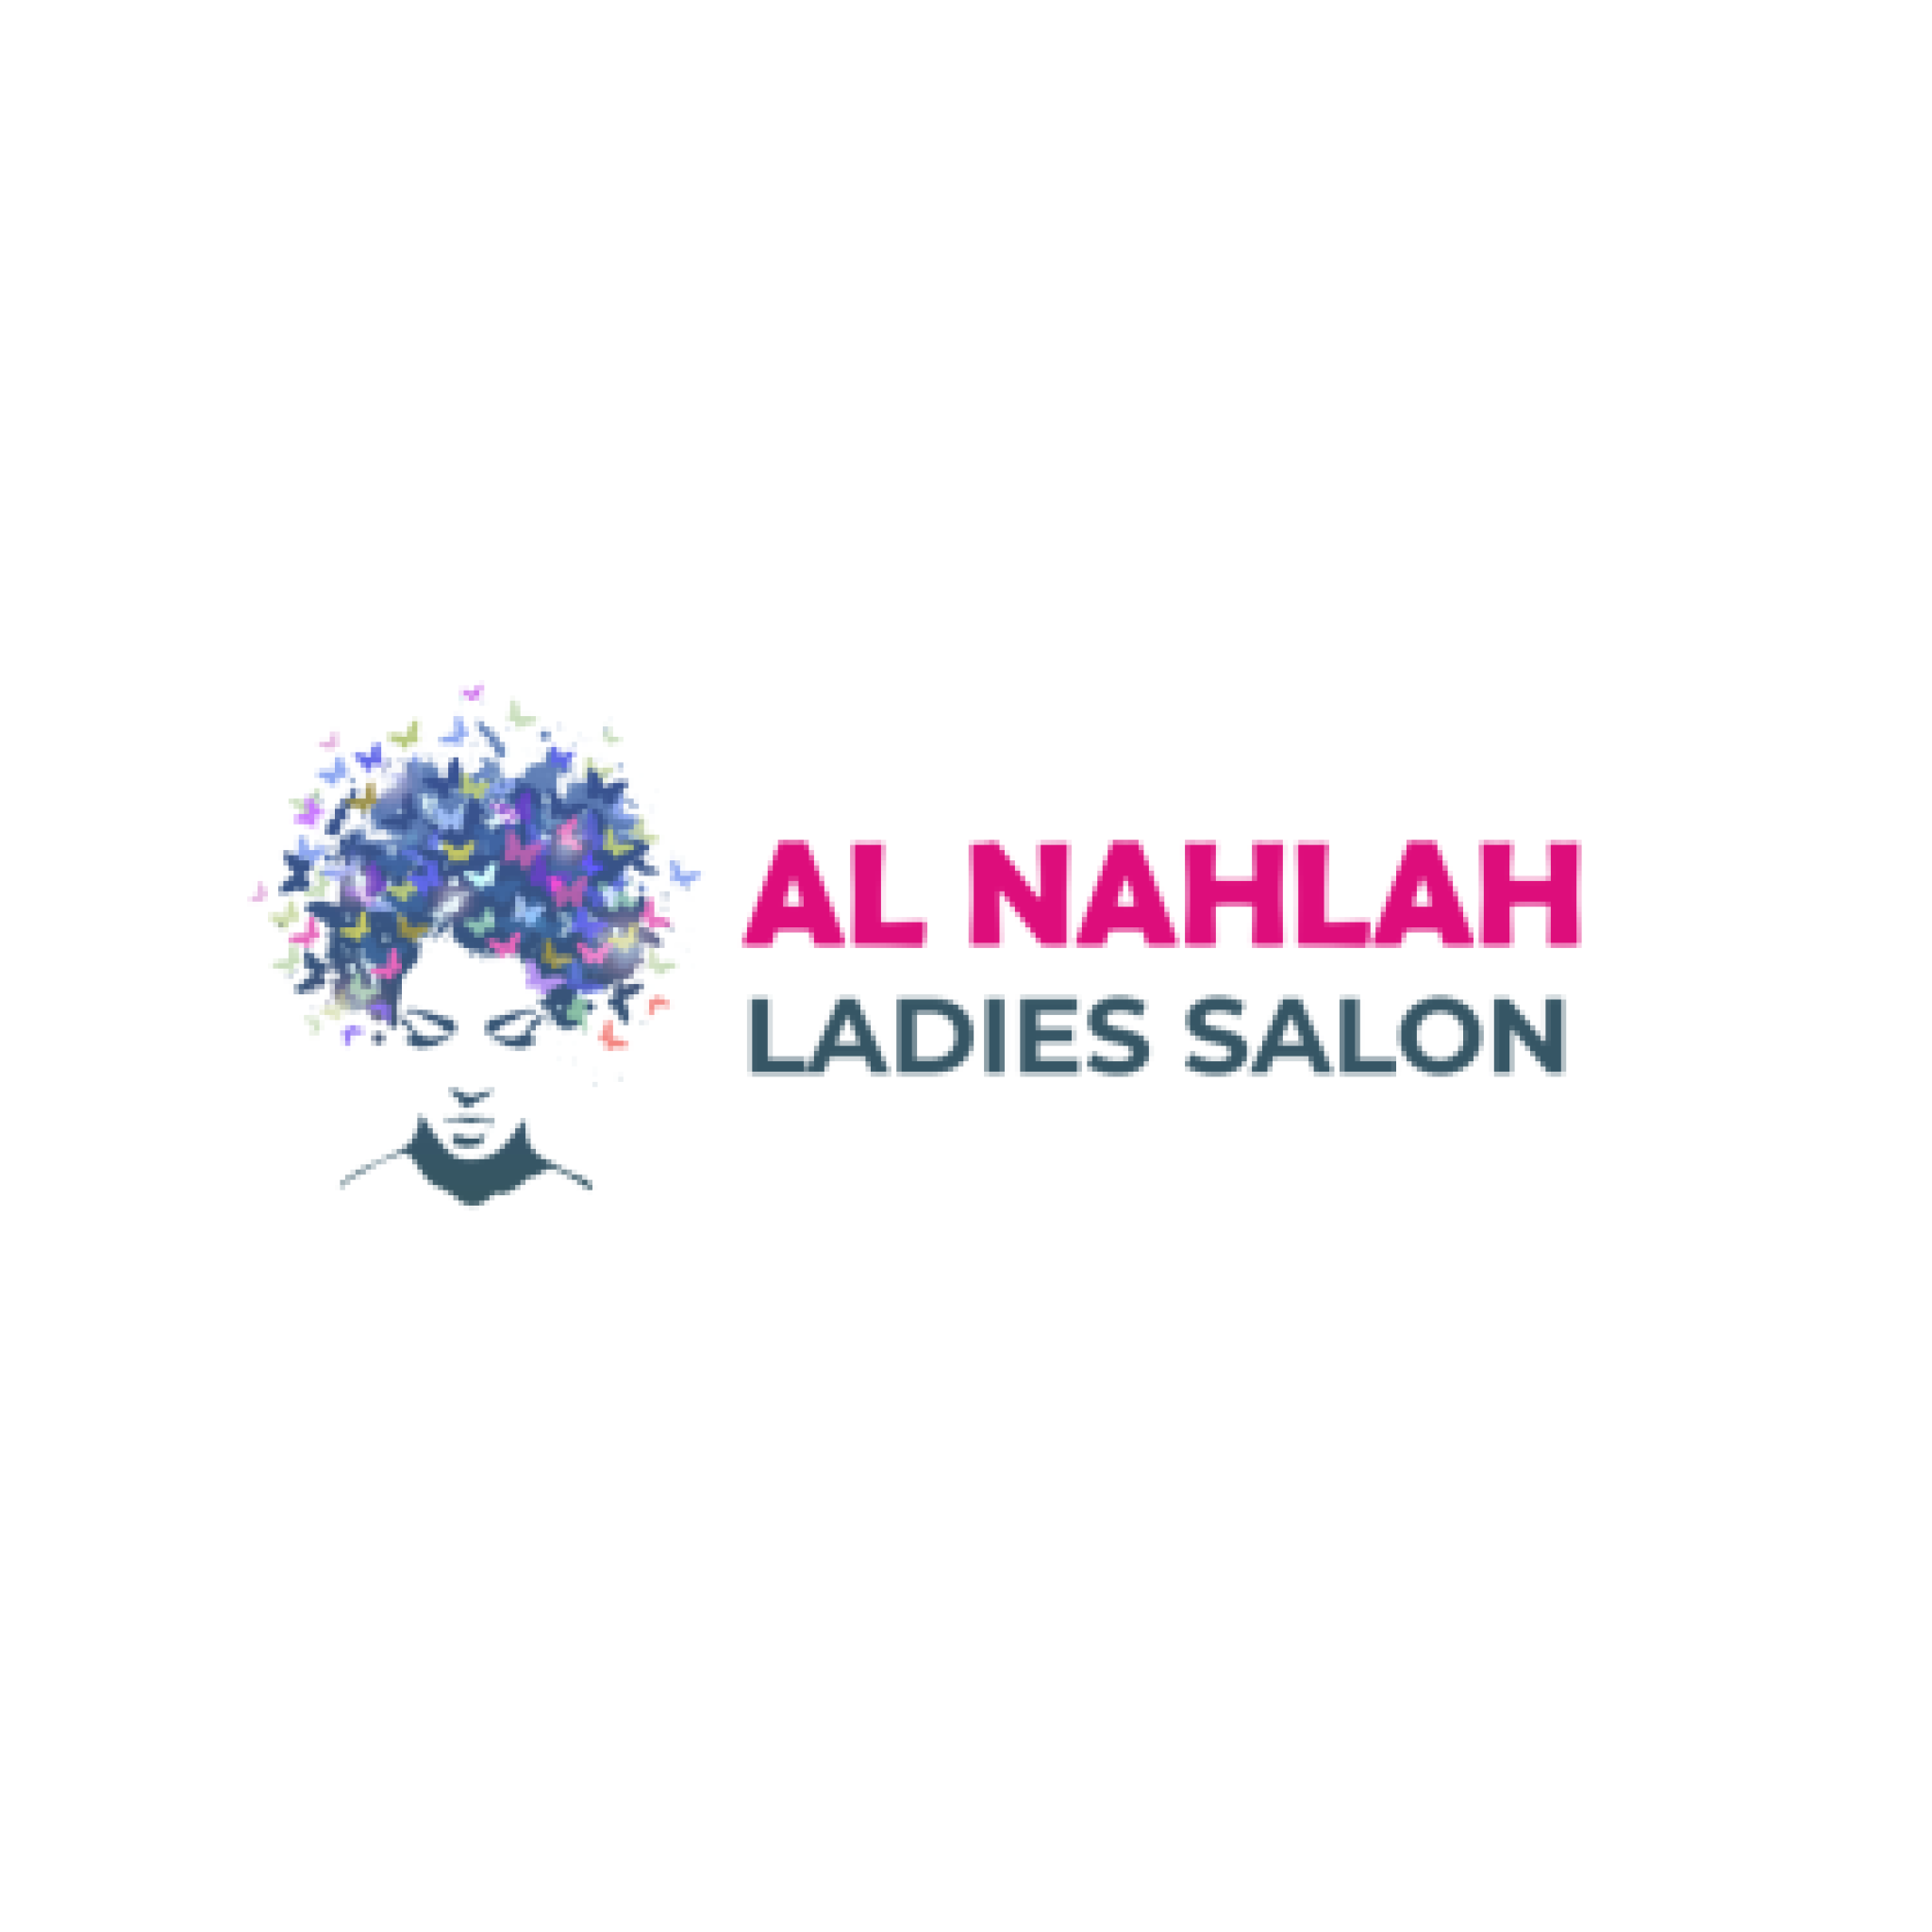 Al Nahlah Ladies Salon